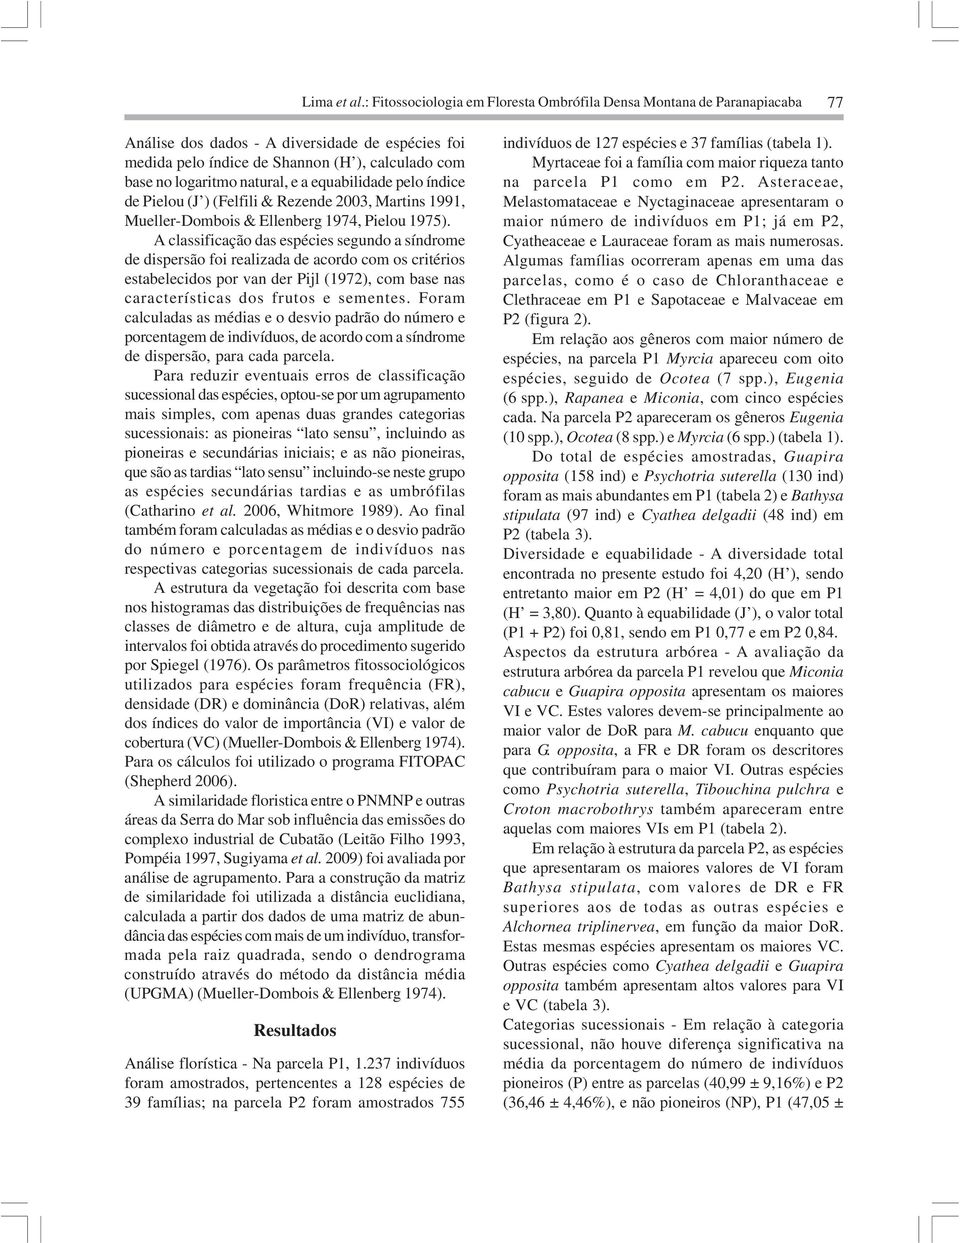 natural, e a equabilidade pelo índice de Pielou (J ) (Felfili & Rezende 2003, Martins 1991, Mueller-Dombois & Ellenberg 1974, Pielou 1975).